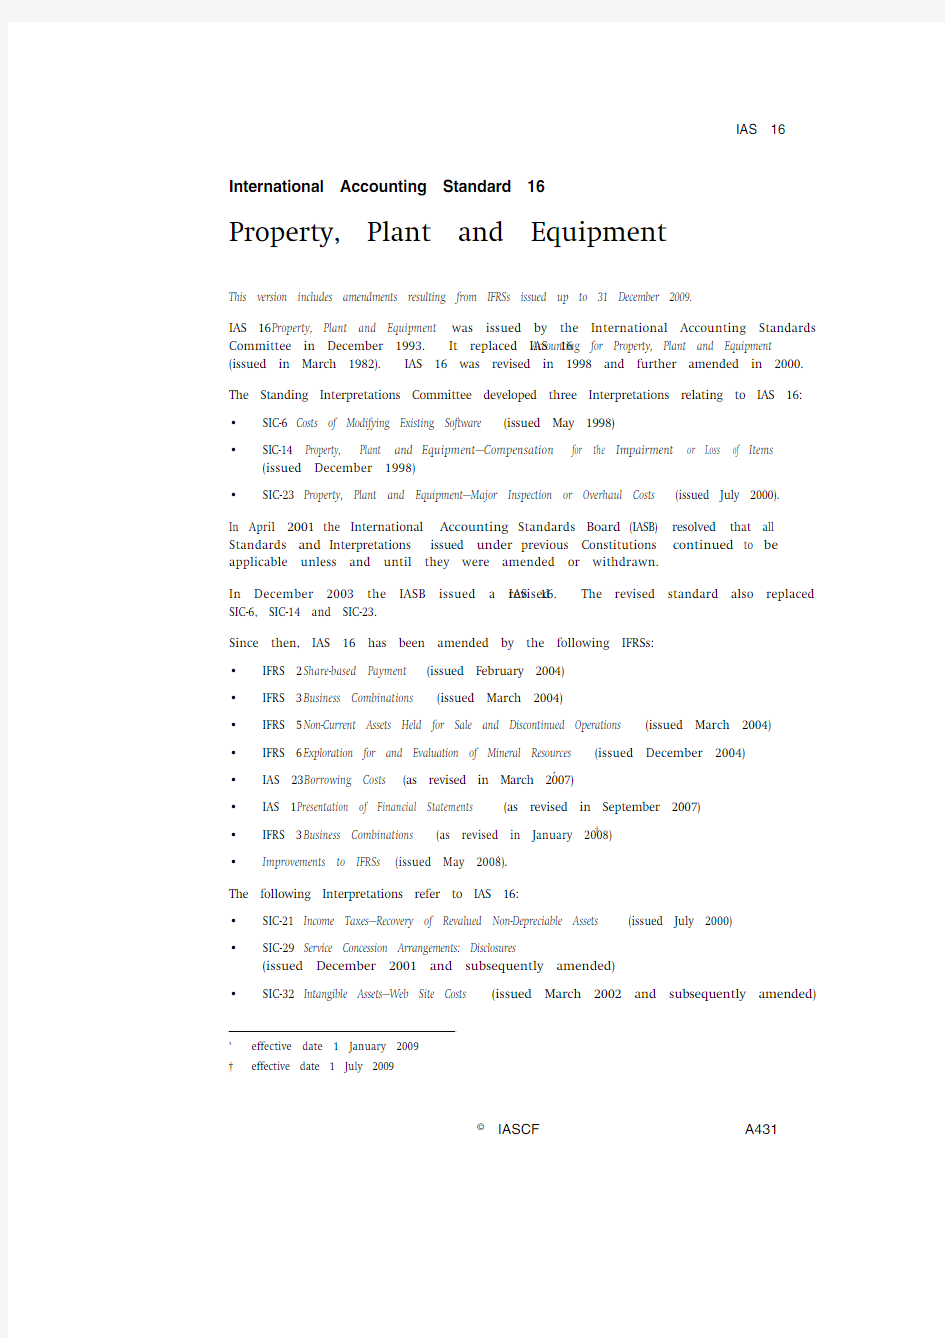 IAS16_Property, Plant andEquipment